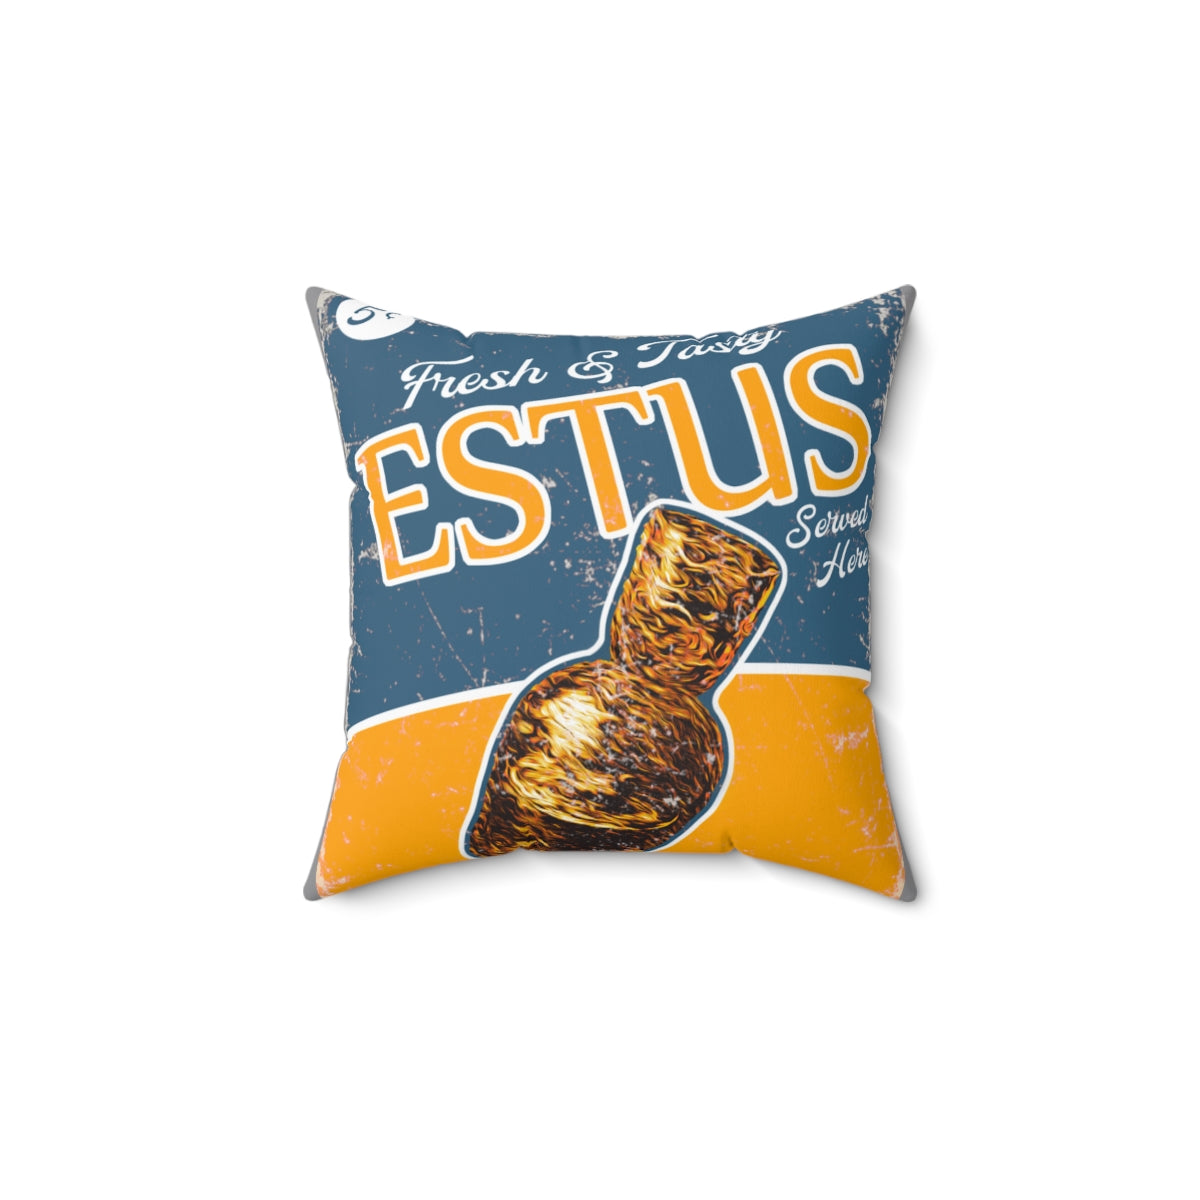 Pillow - Drink Estus